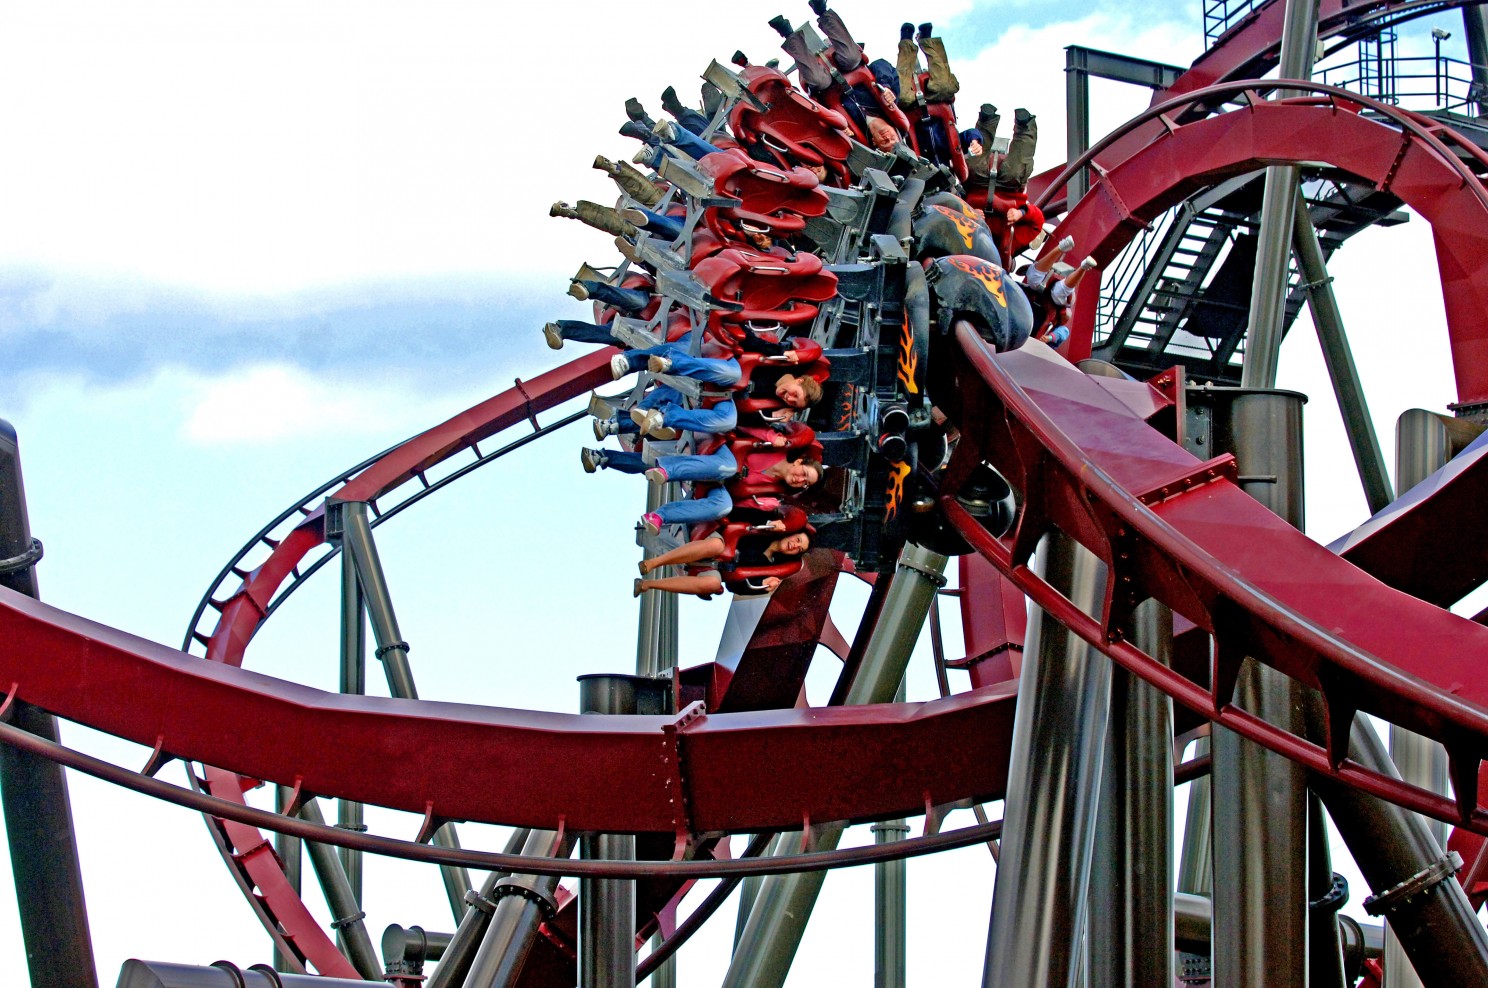 nemesis-inferno-rollercoaster-thorpe-park1